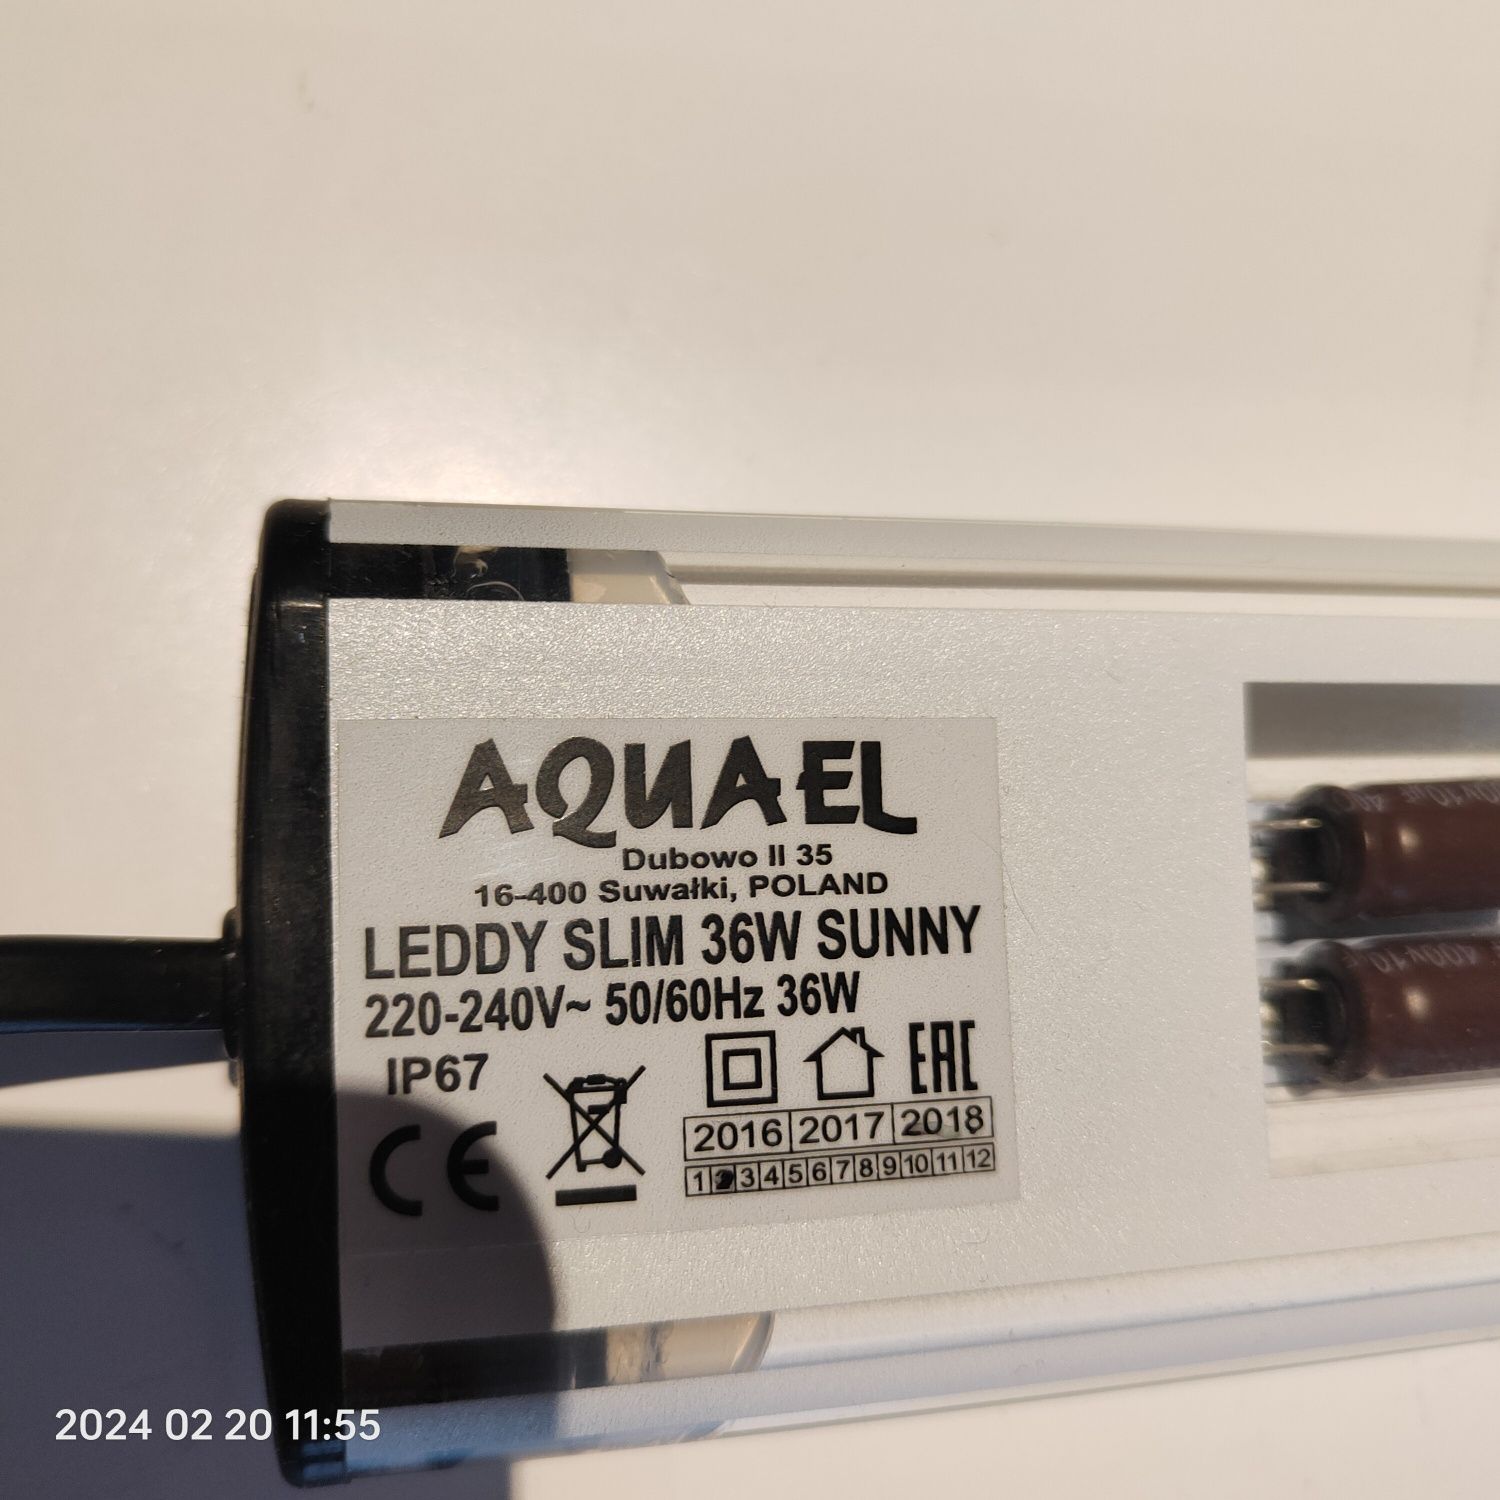 Lampa Aquael leddy slim 36W sunny